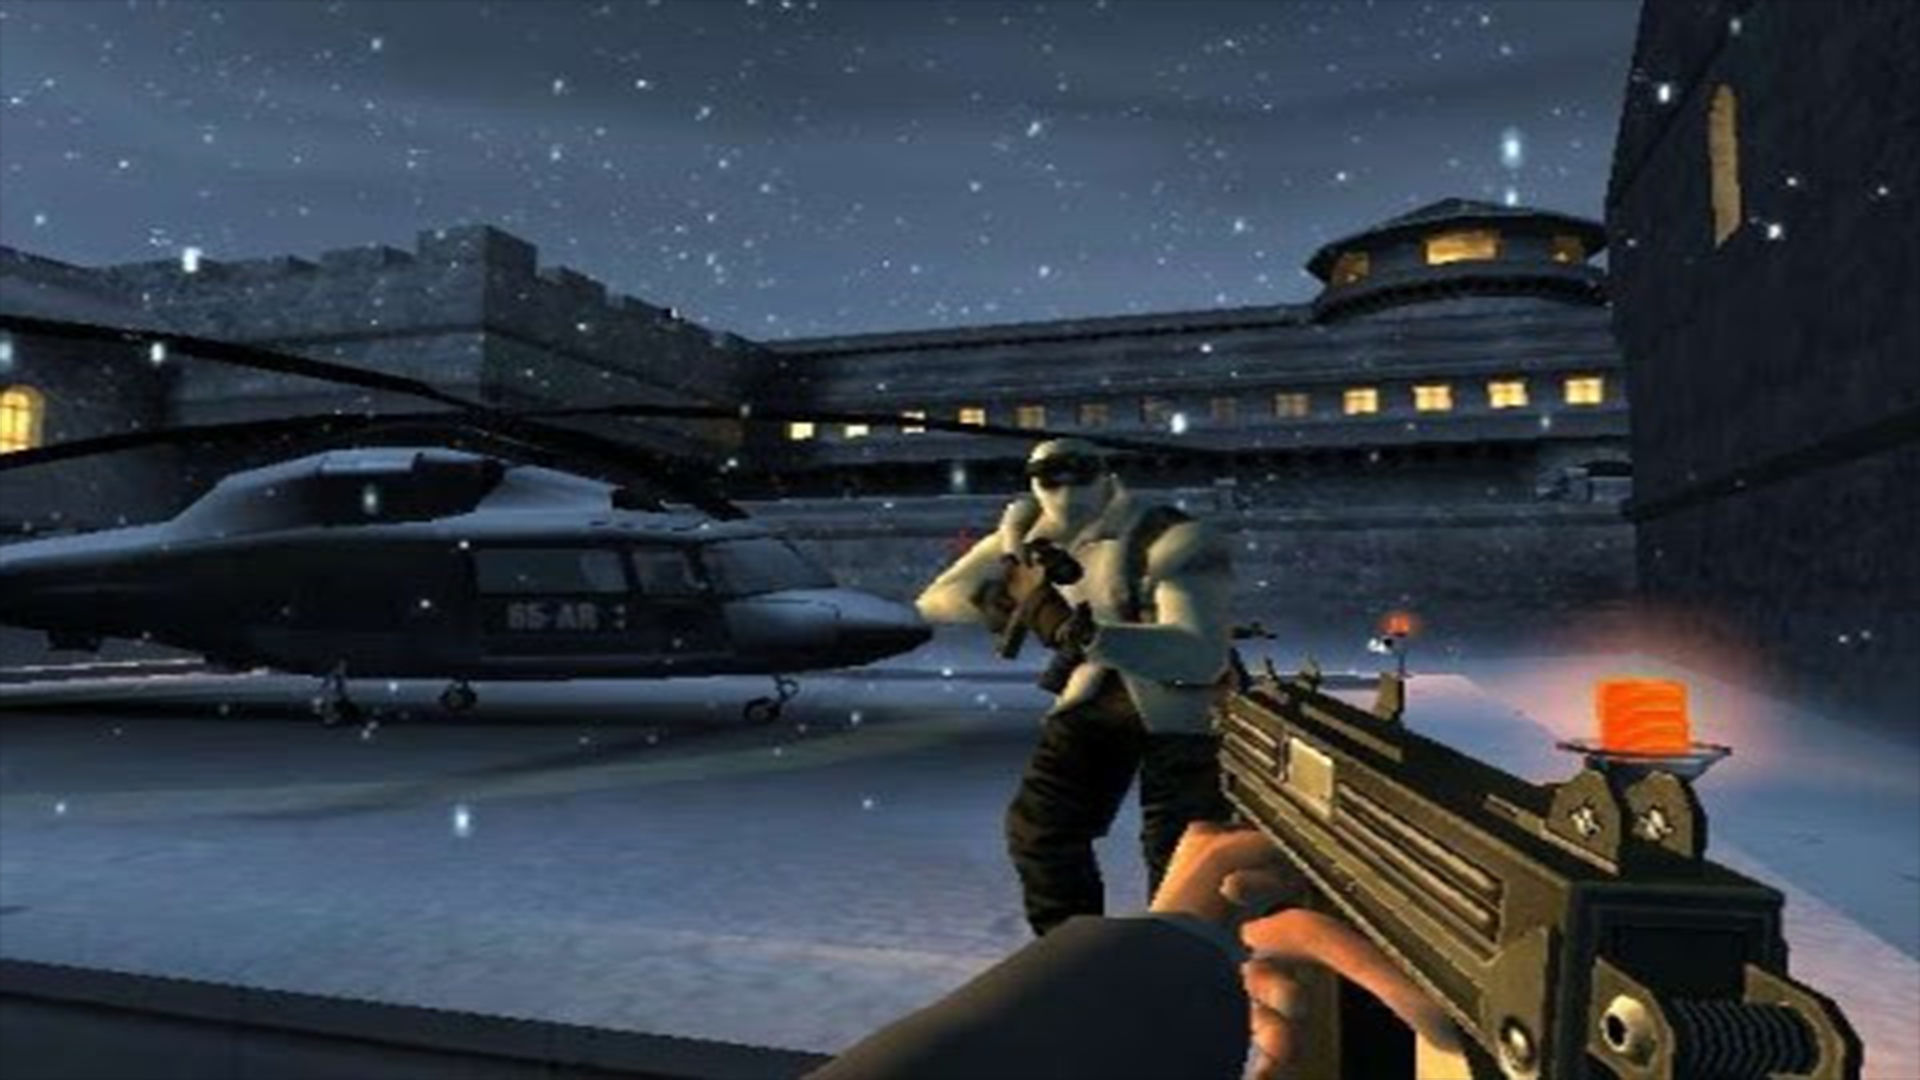 download game james bond 007 nightfire